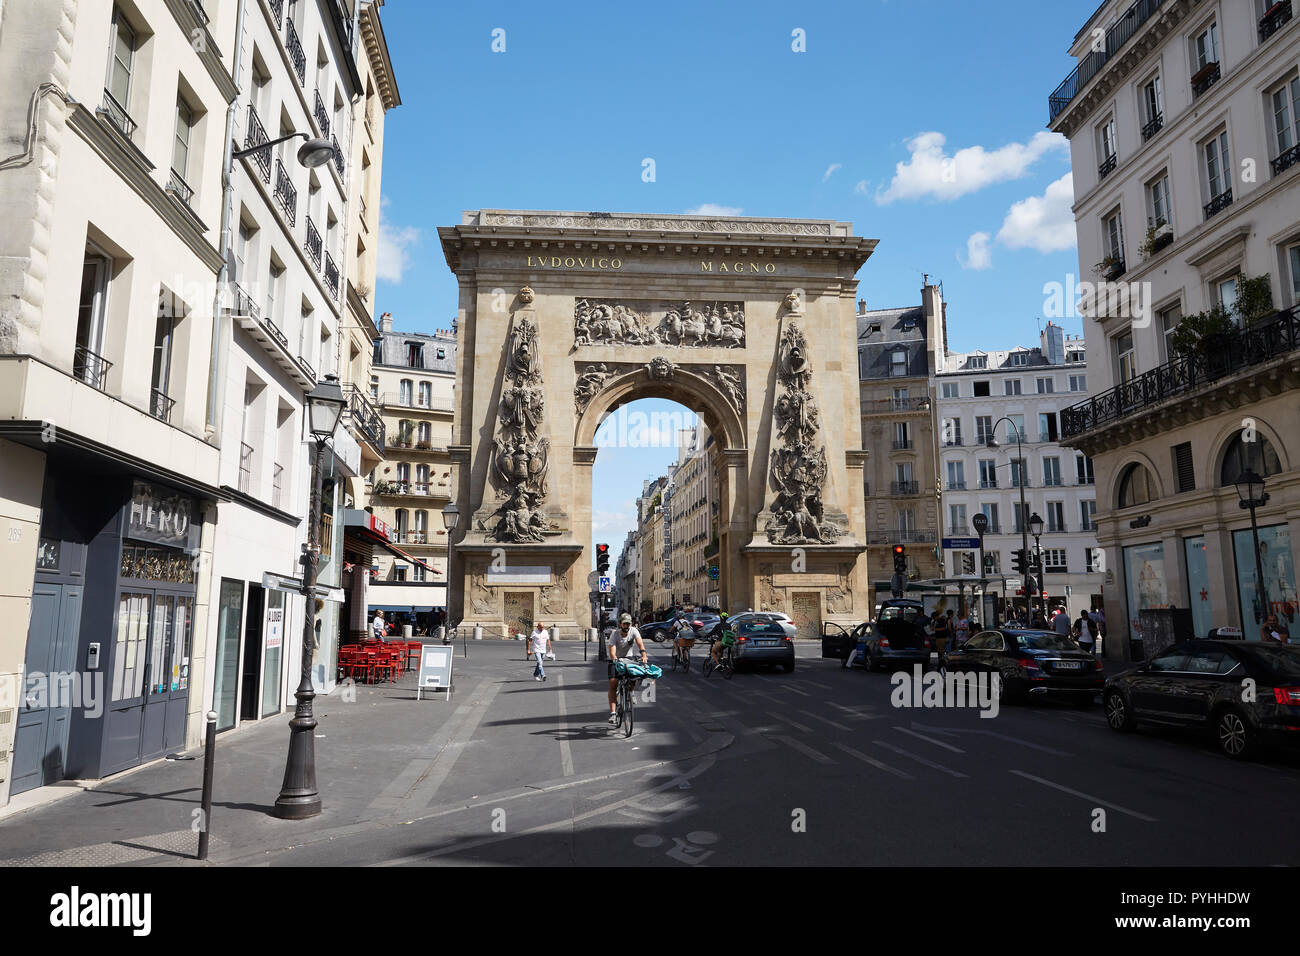 Rue saint denis paris hi-res stock photography and images - Alamy